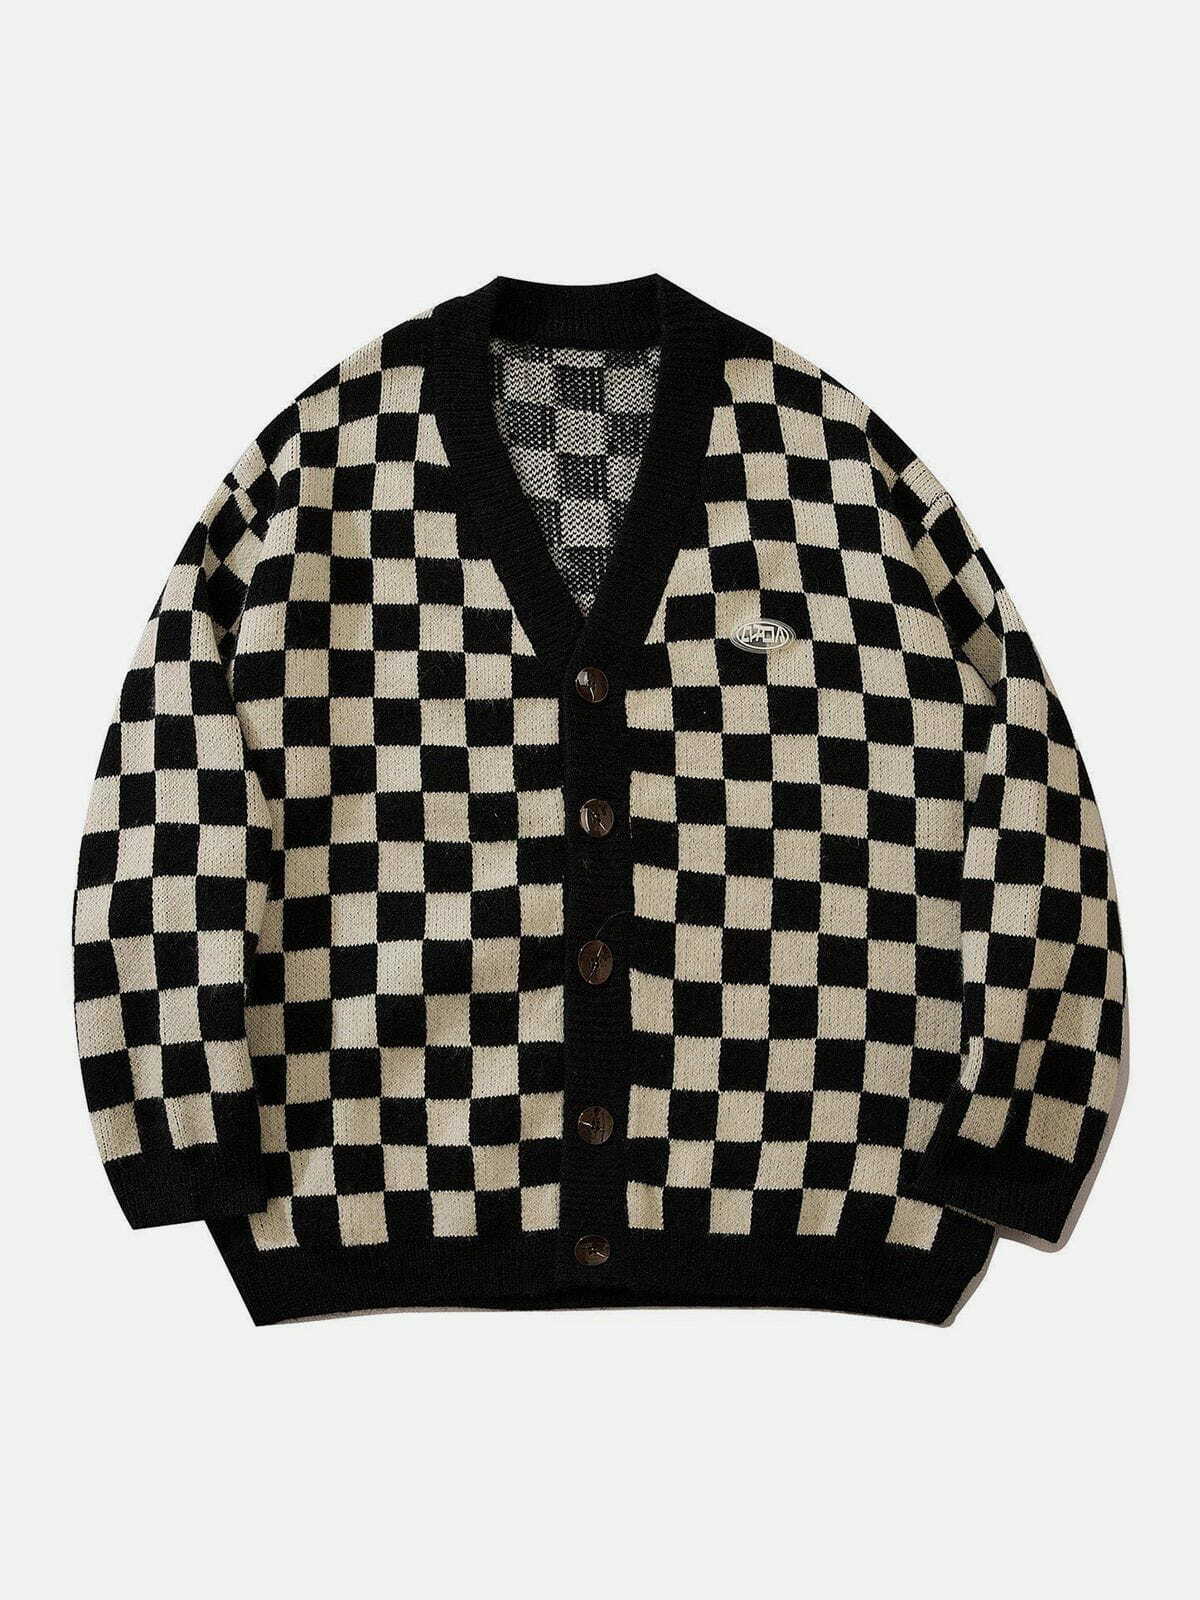 checkerboard knit cardigan retro urban chic 3612